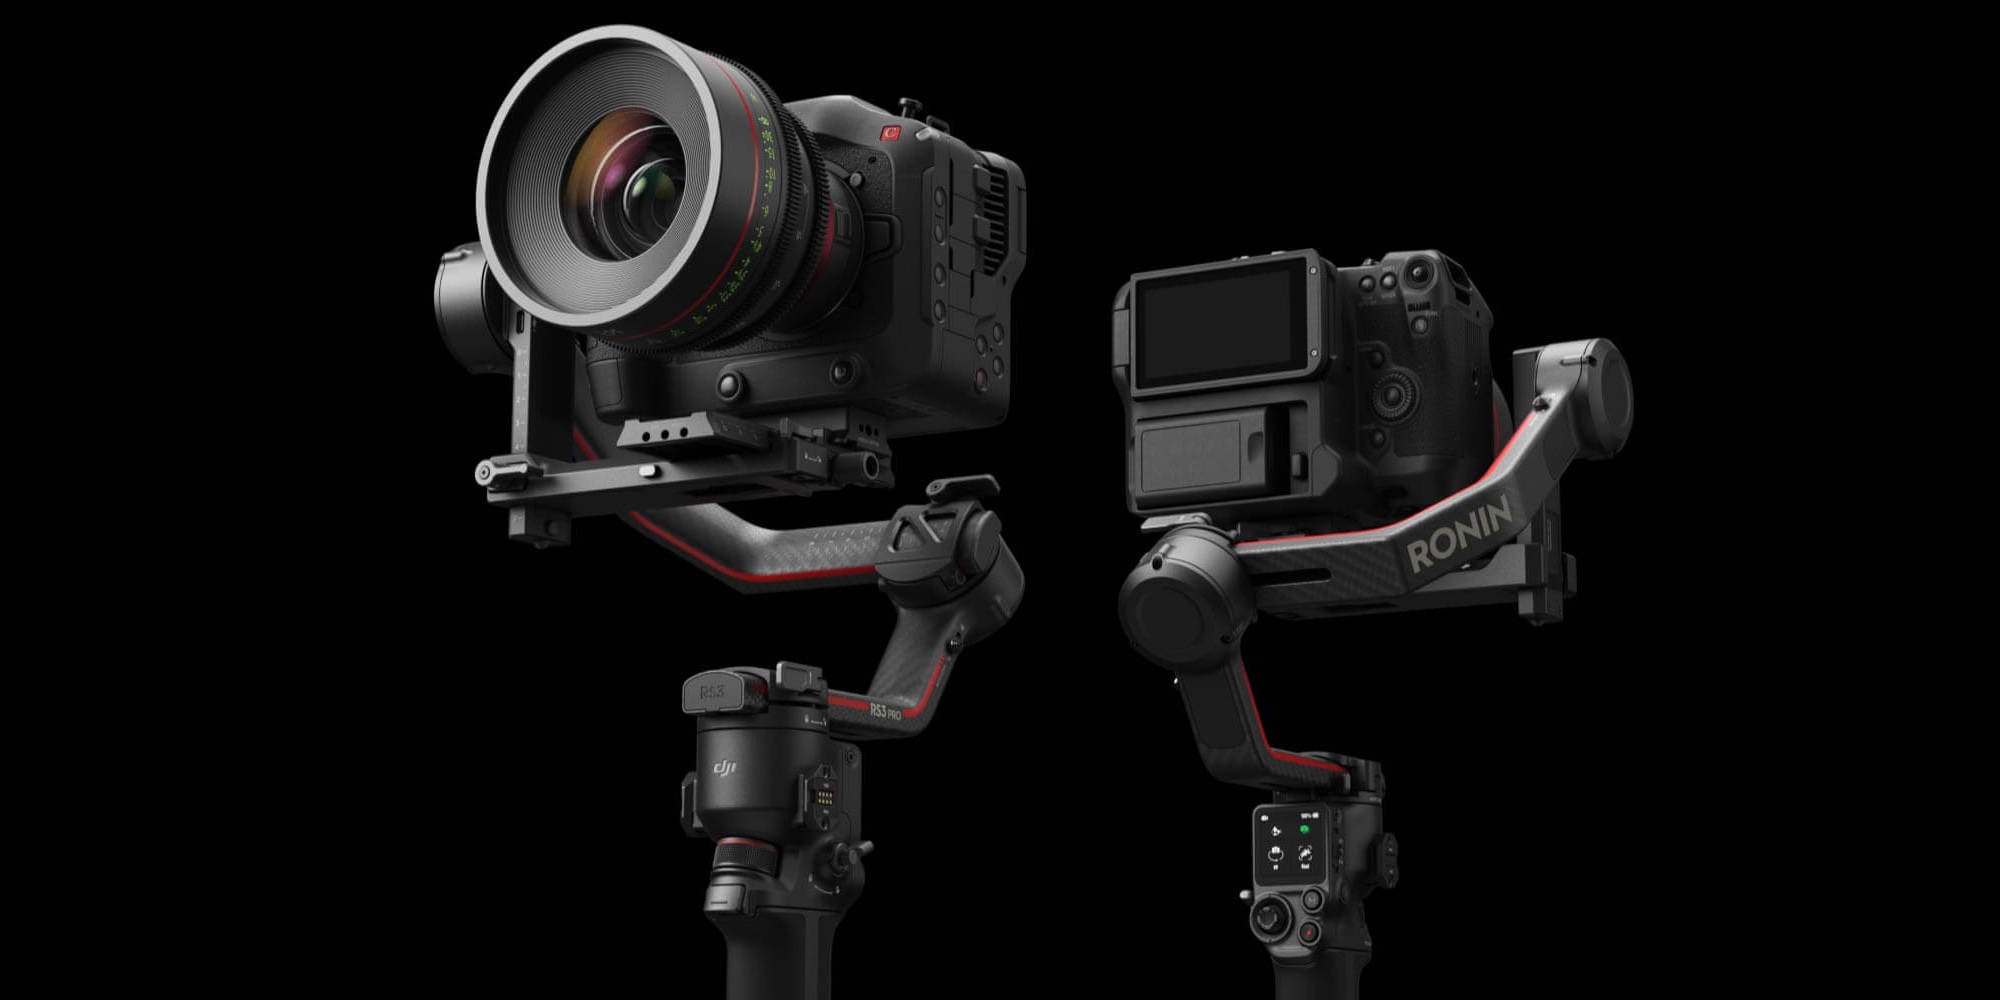 DJI’s newest RS 3 camera gimbals see first discounts starting at $469 (Reg. $549+)